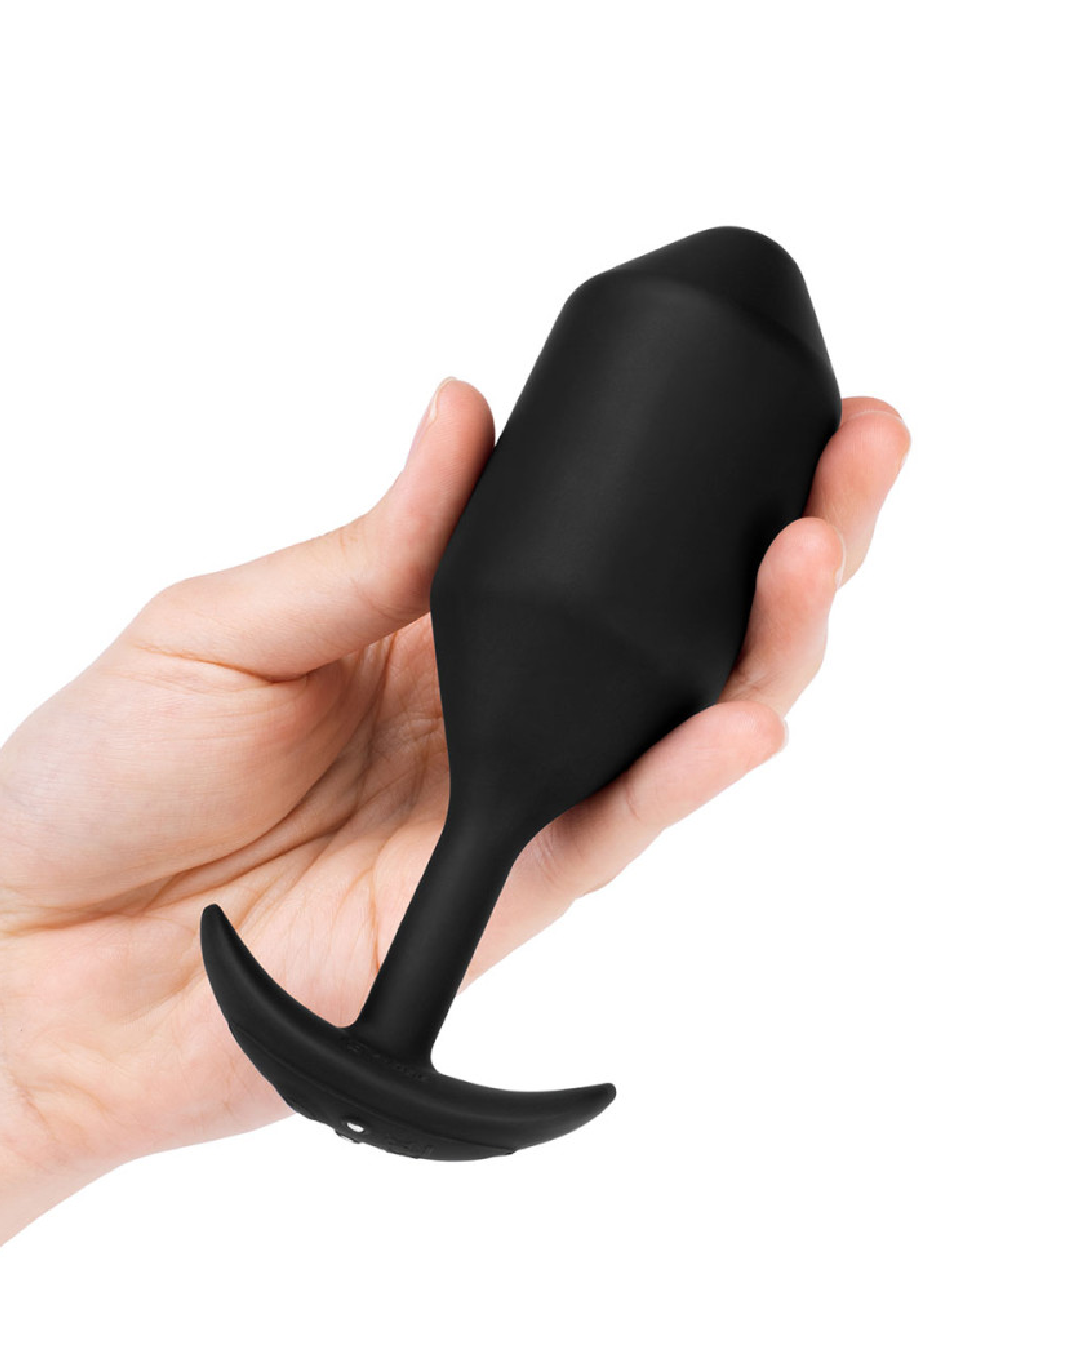 B-Vibe Vibrating Snug Plug 5 (XXL) - Black held in a hand